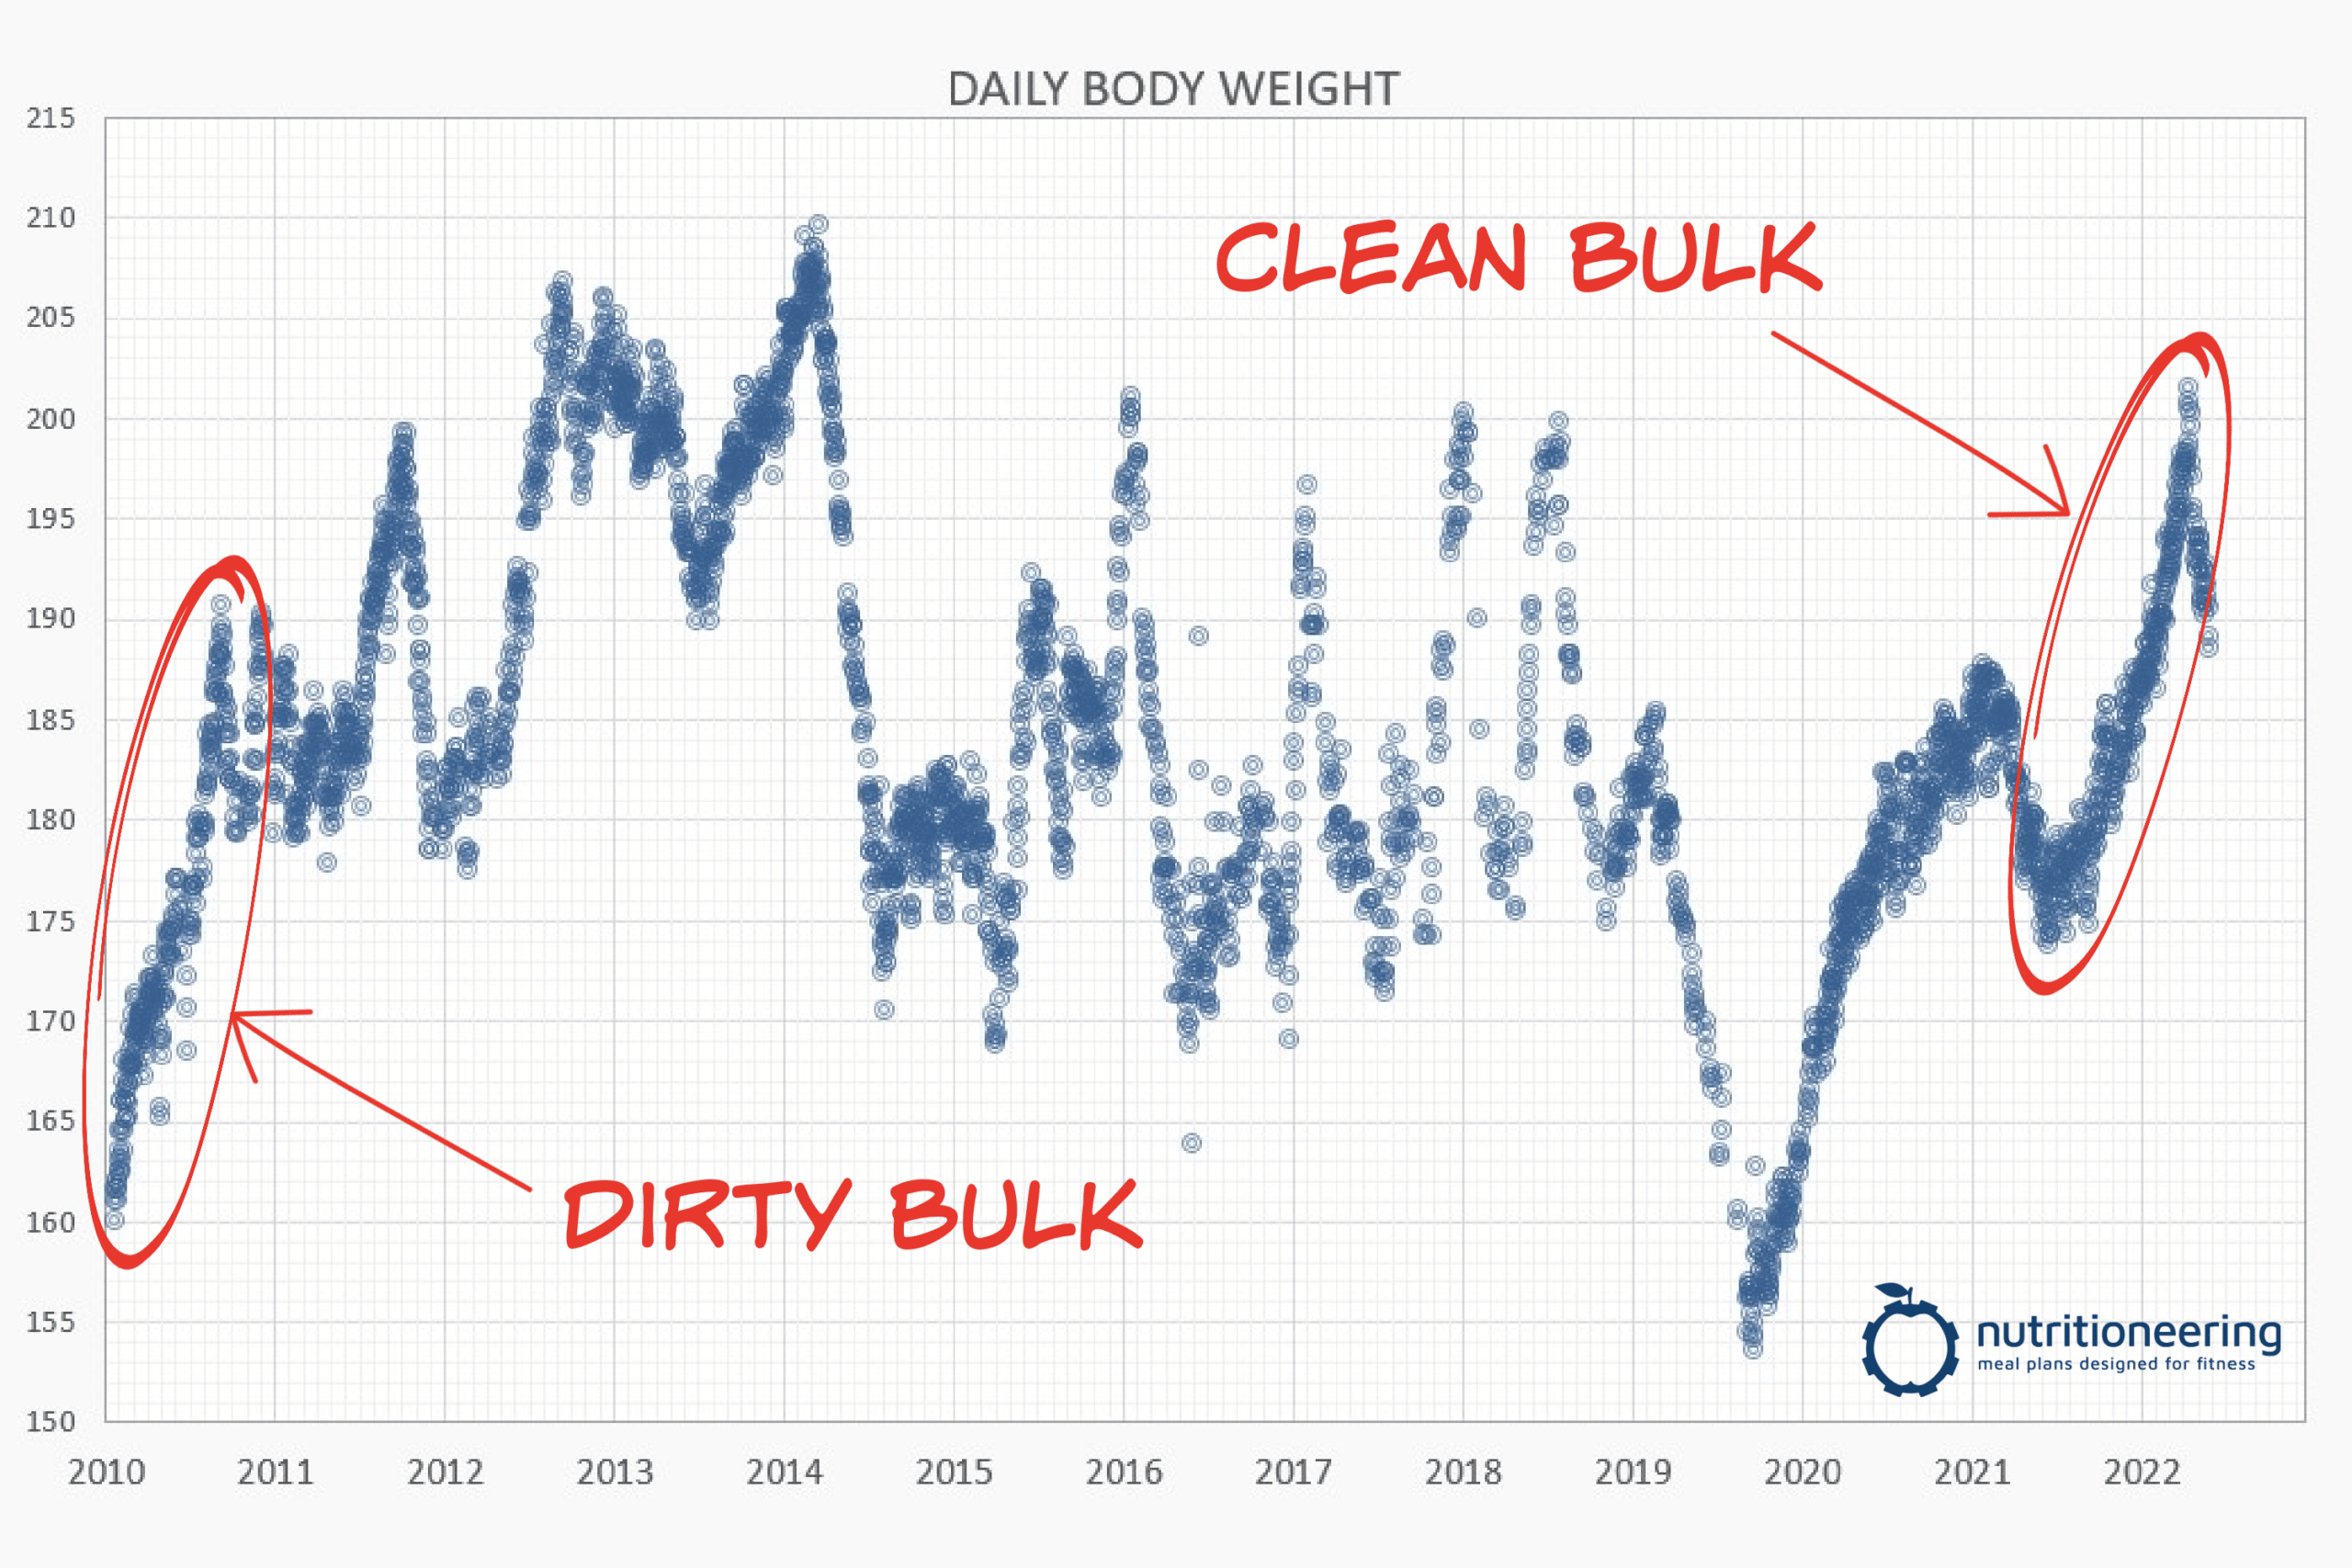 Dirty Bulk vs Clean Bulk Daily Body Weight